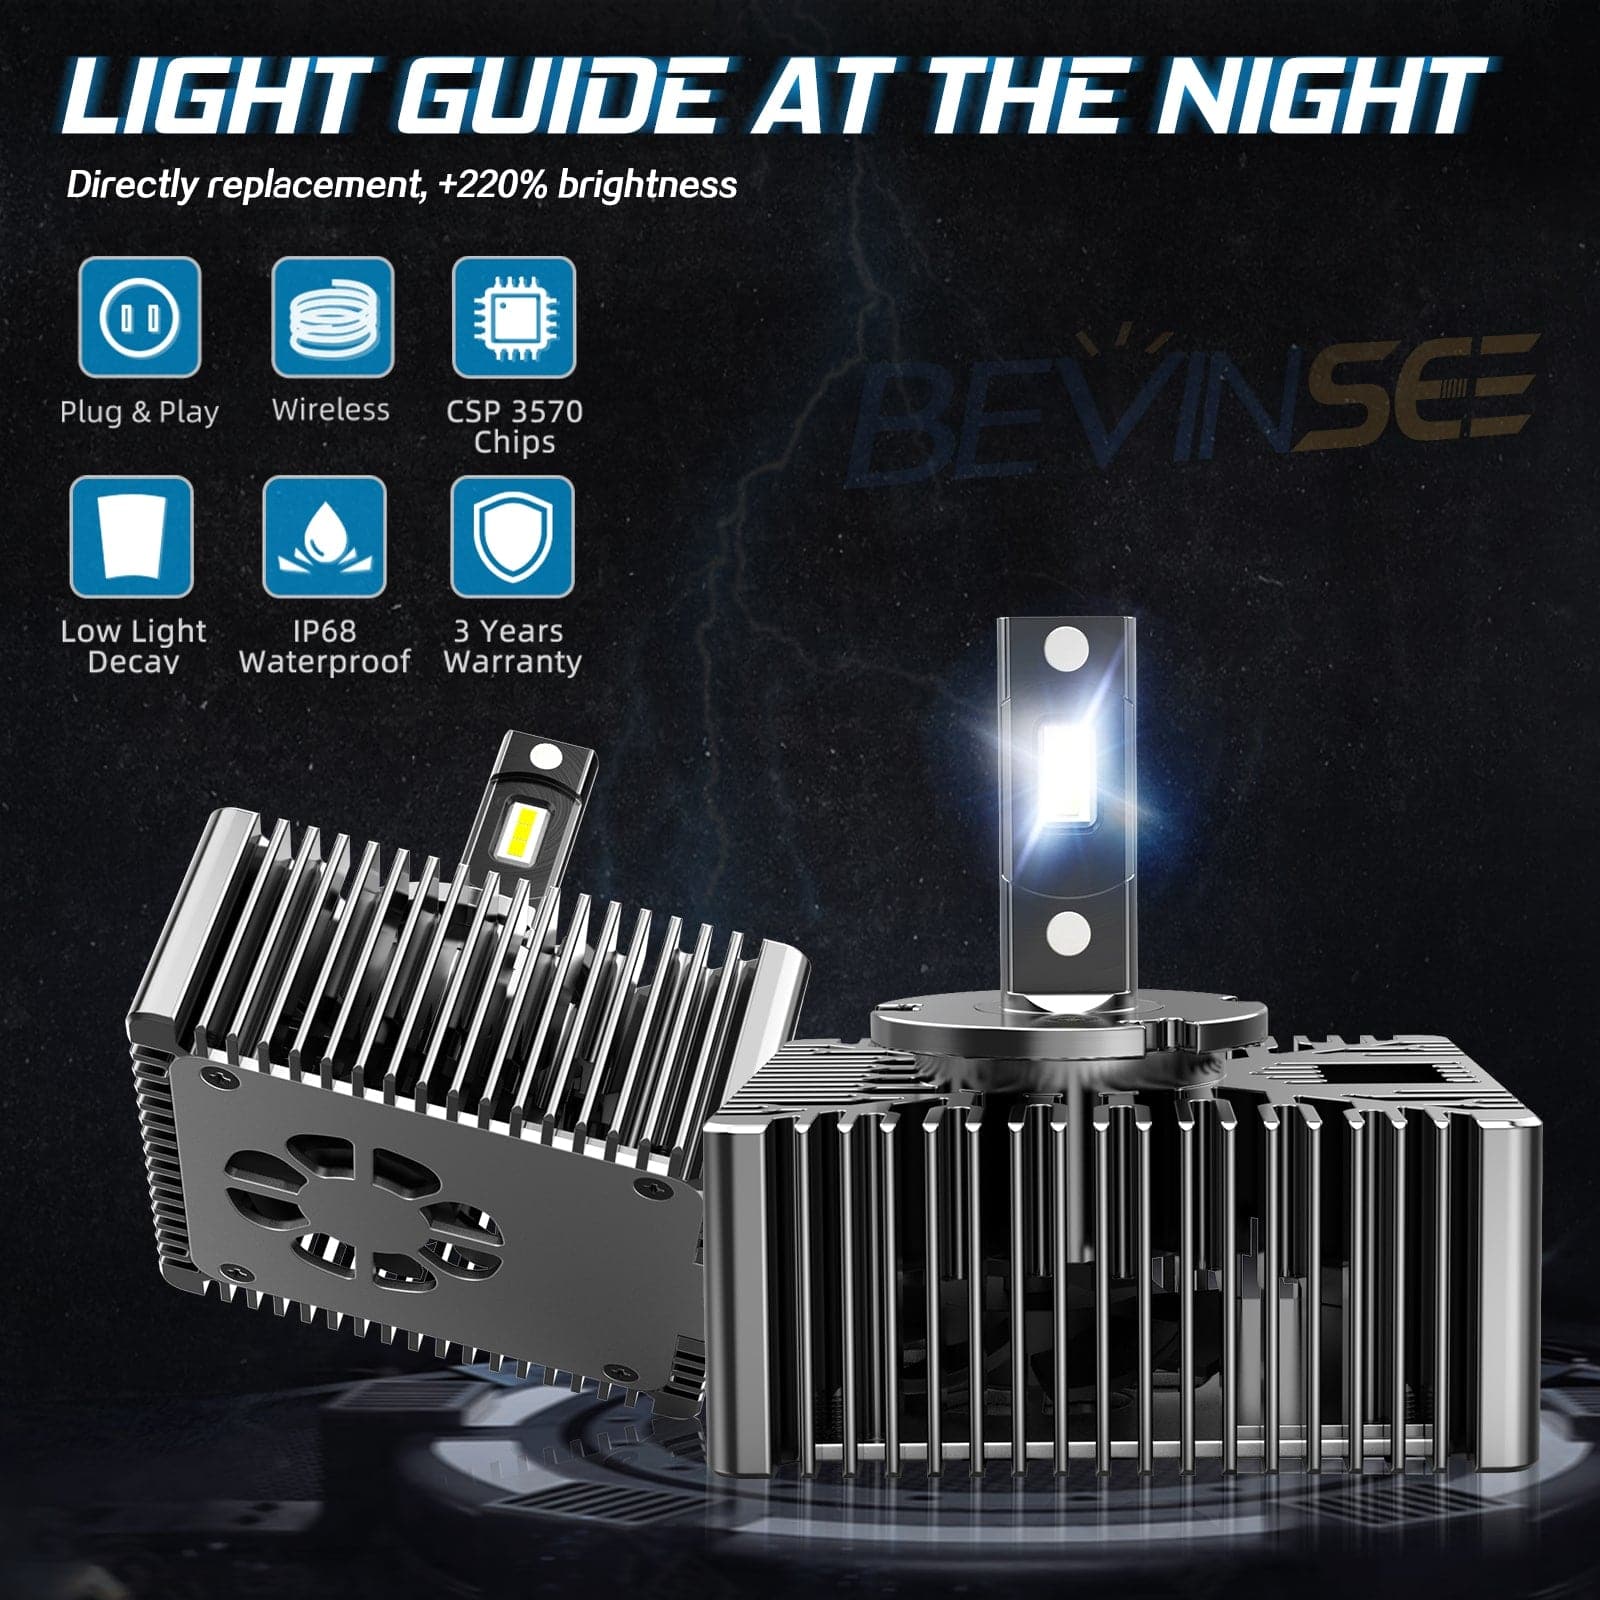 BEVINSEE D5S LED Xenon HID Headlight Bulbs 7000LM/pair 6000K White